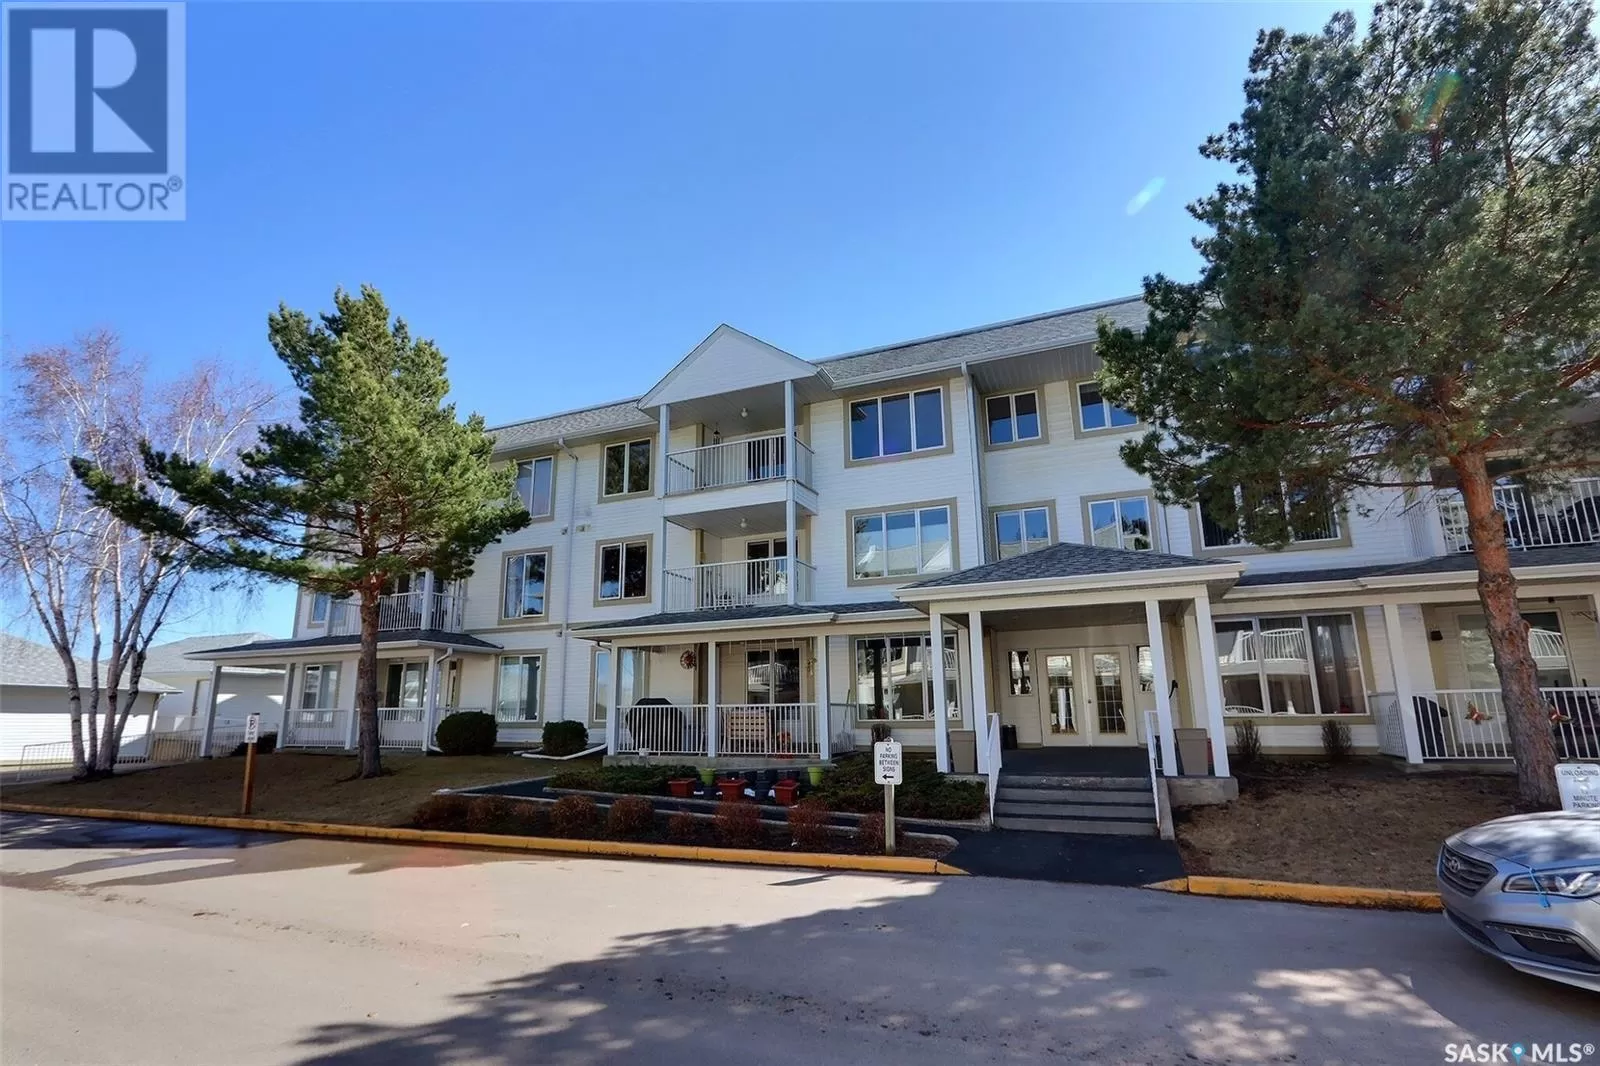 Apartment for rent: 312 305 34th Street W, Prince Albert, Saskatchewan S6V 8B8